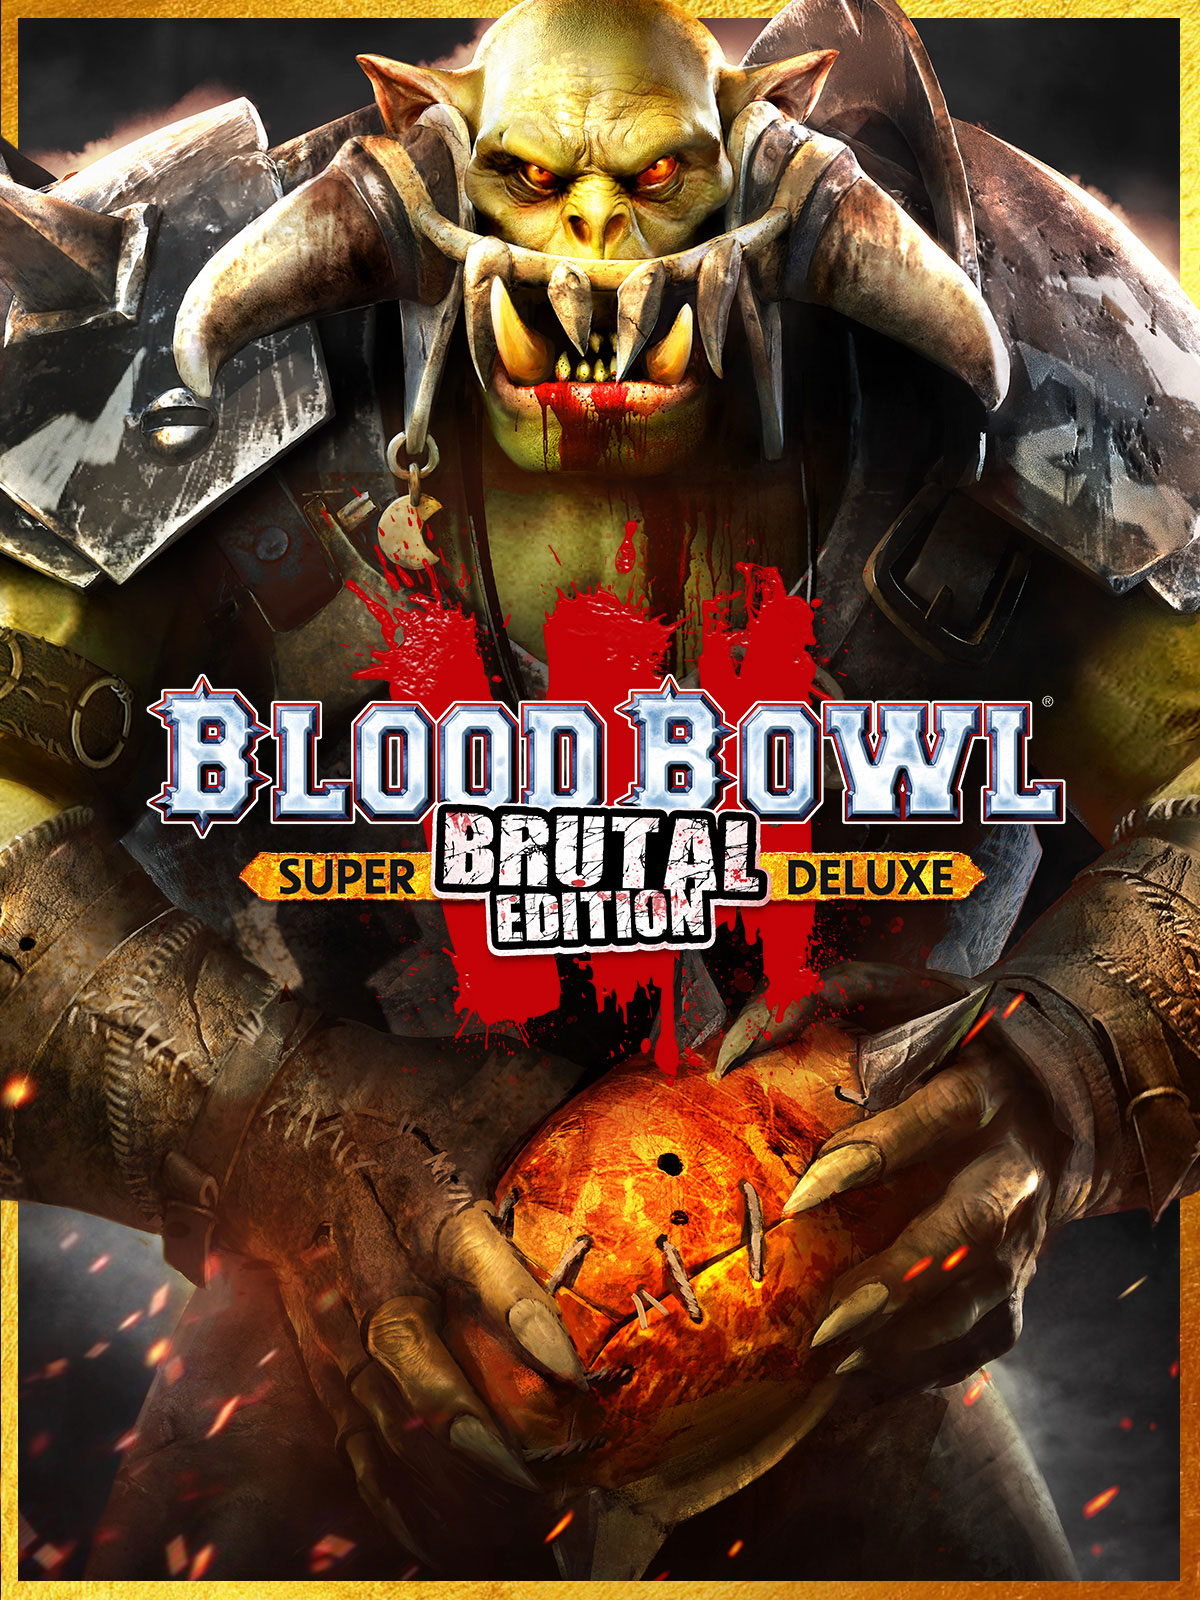 blood bowl 3. brutal edition [pc